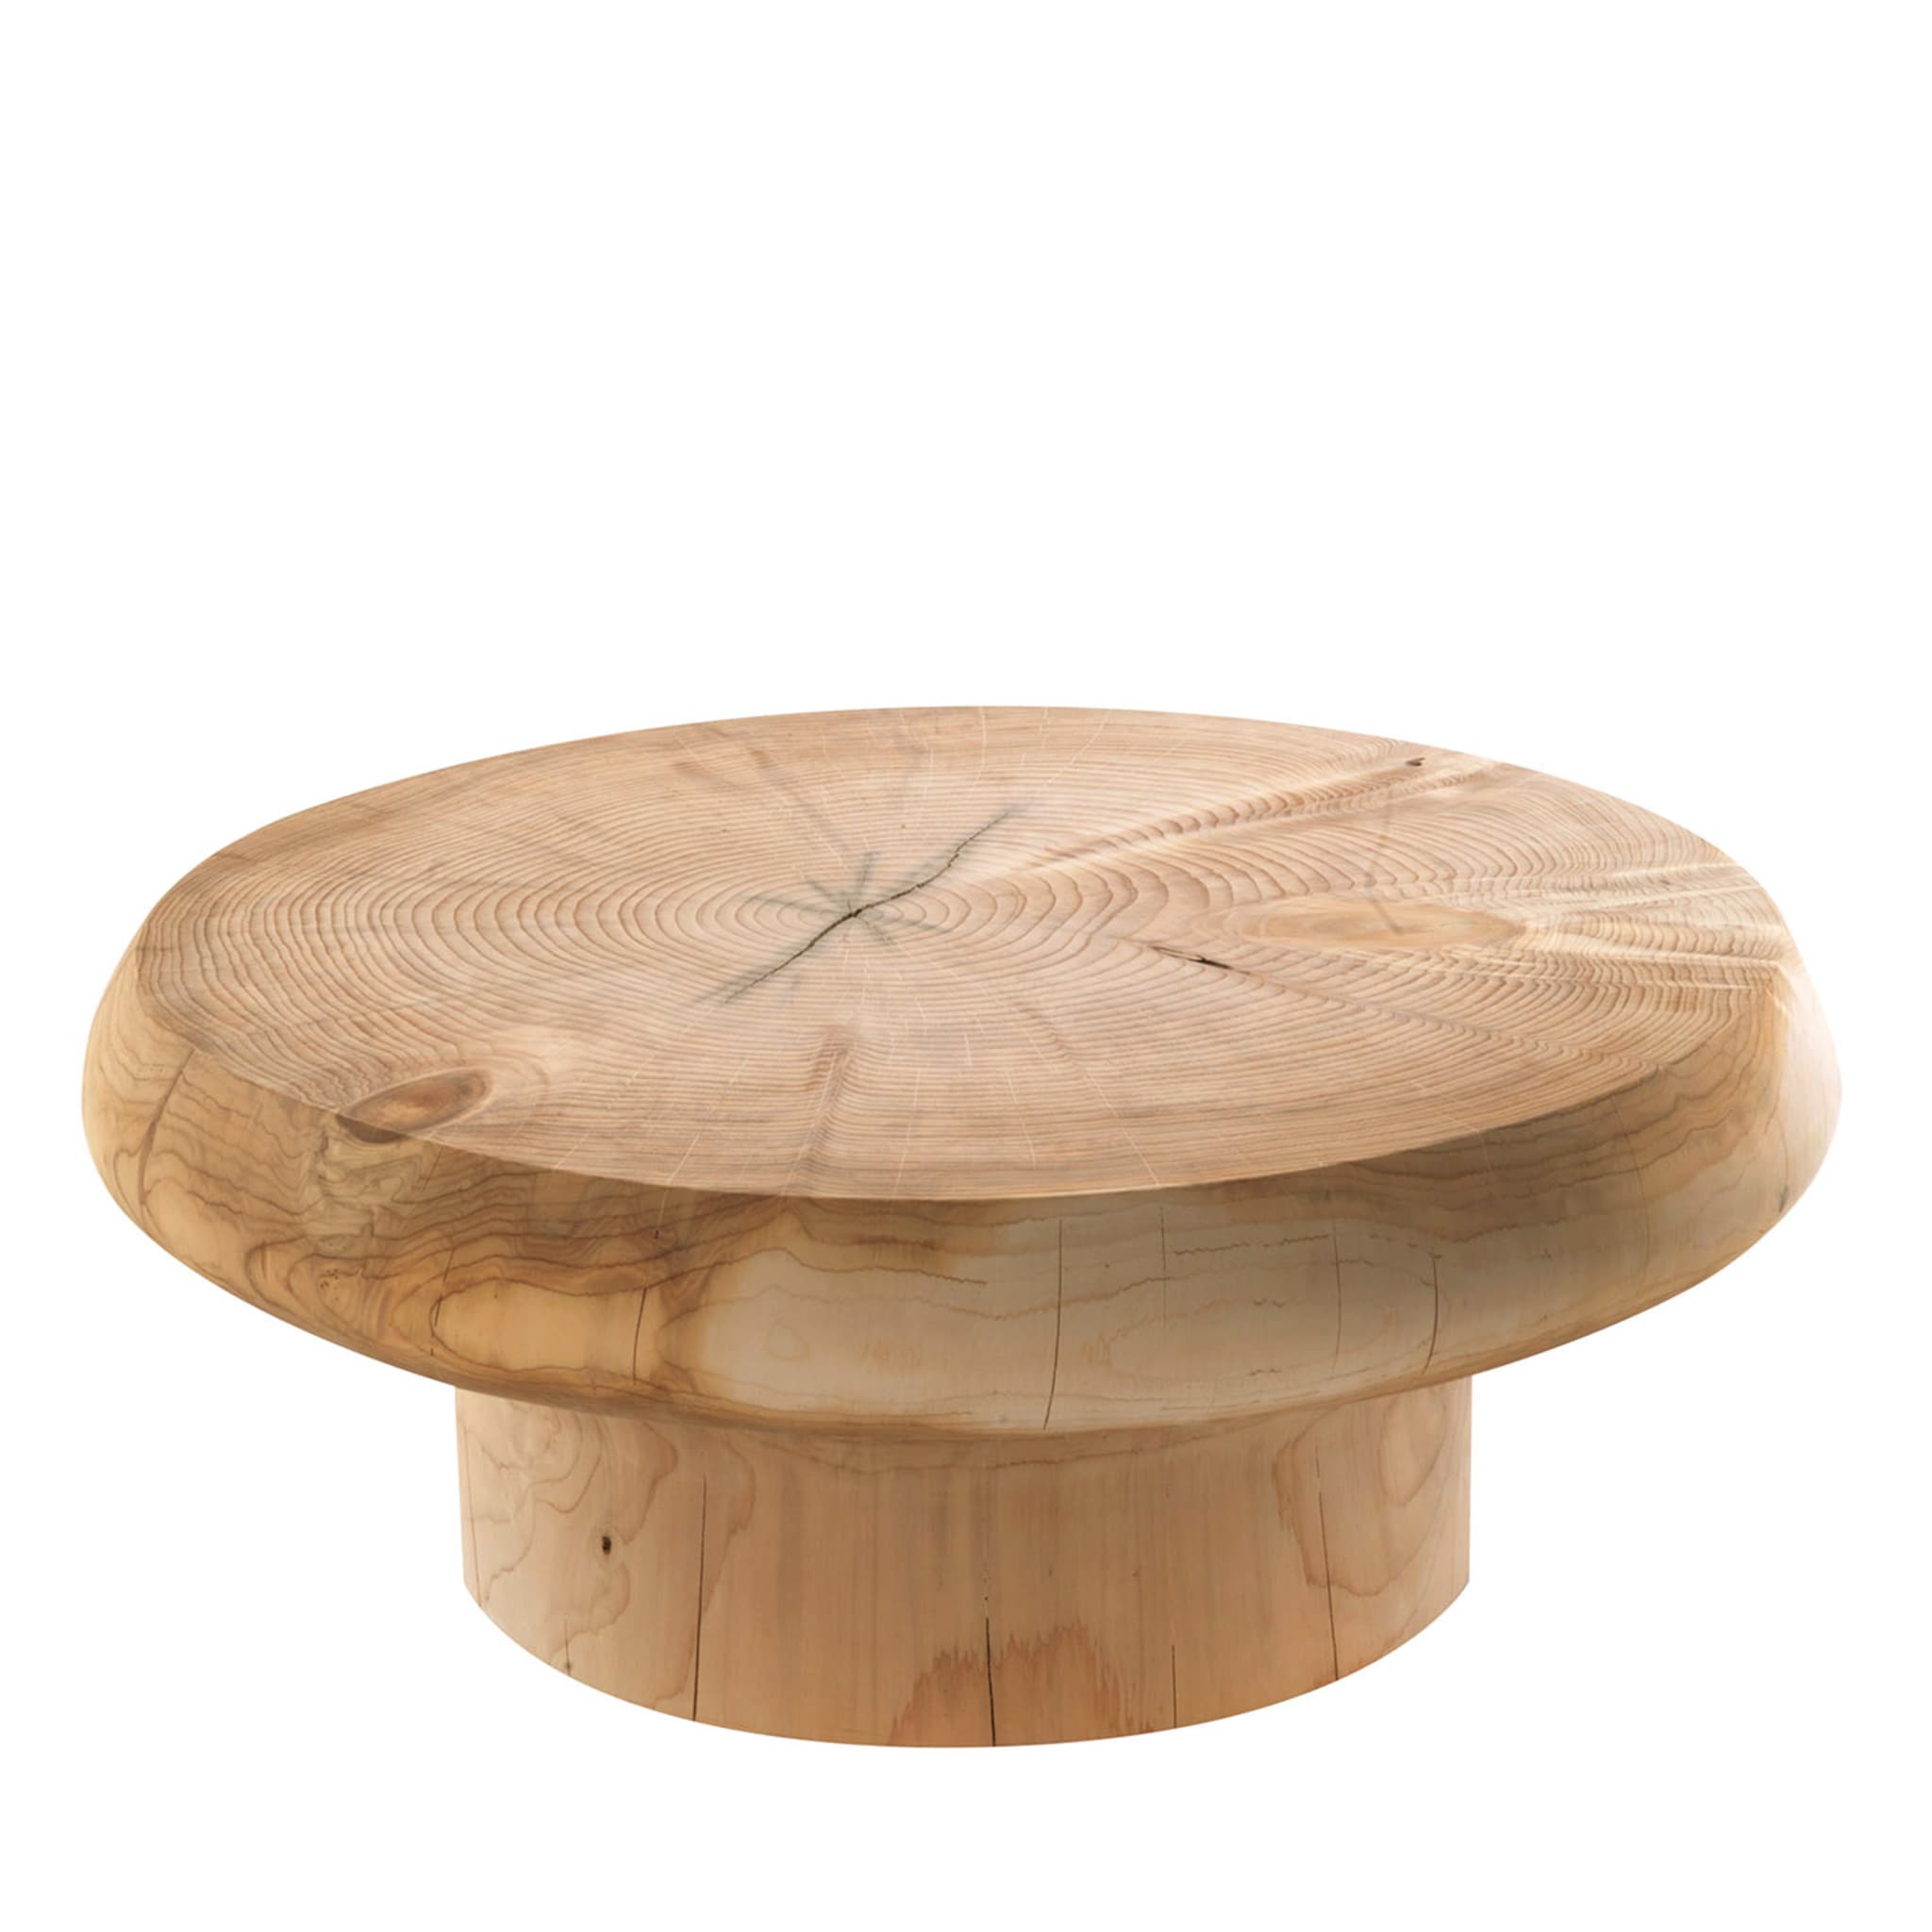 Kenobi Small Round Coffee Table by Bartoli Design - Main view